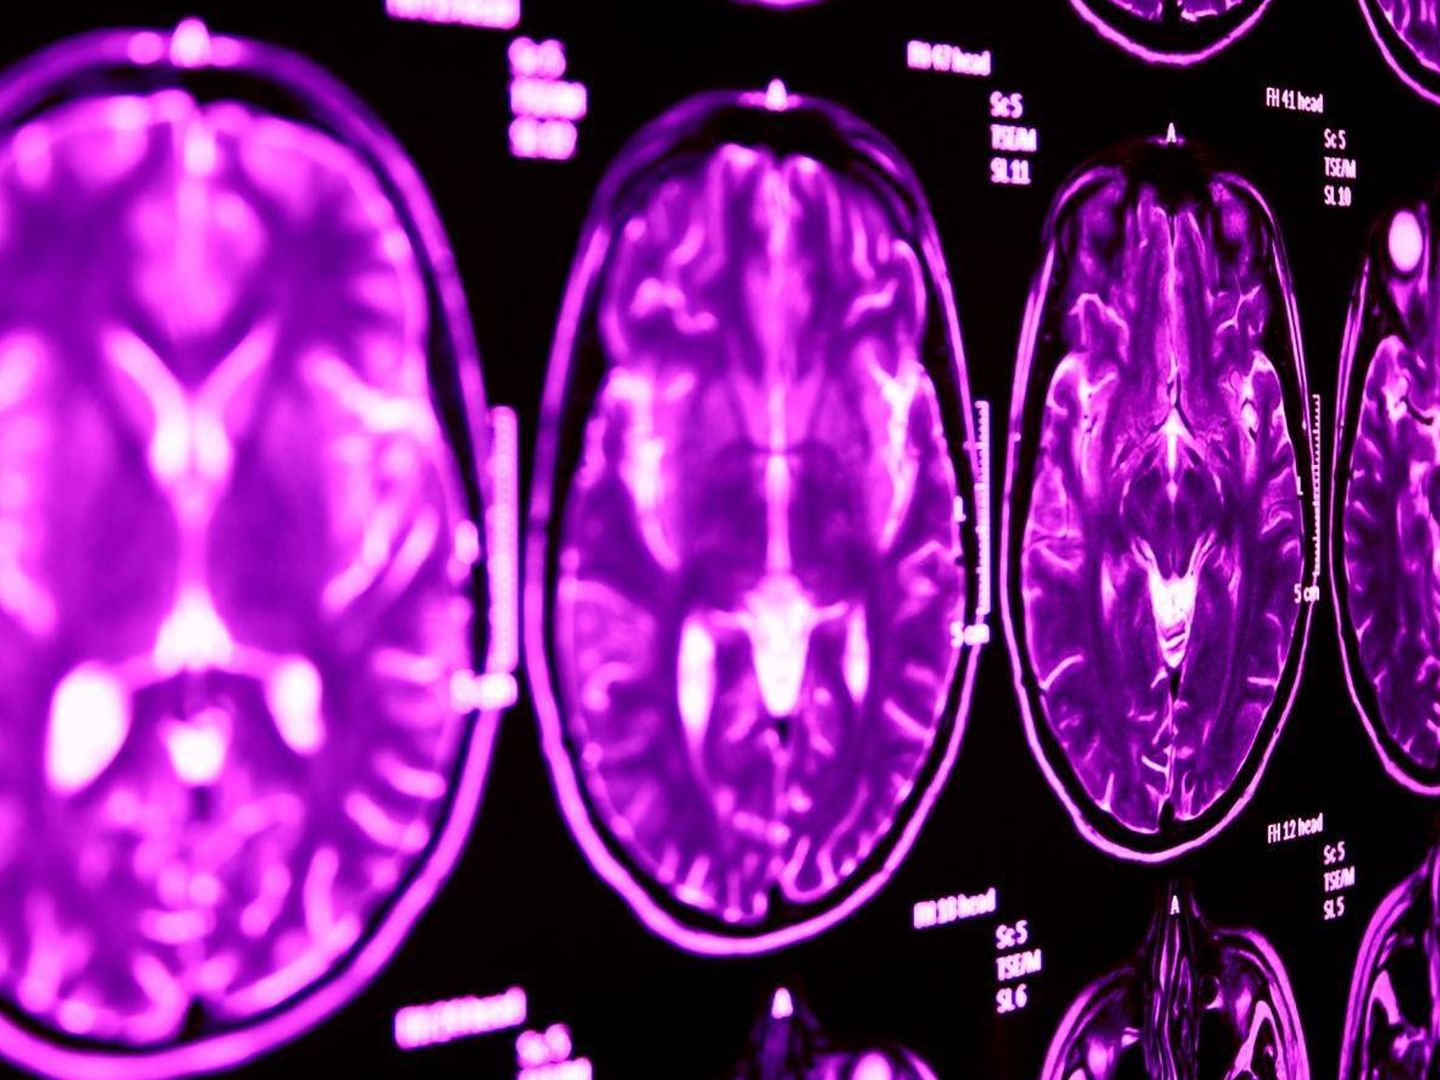 Resonancia magnética cerebral. Foto: Lancaster University